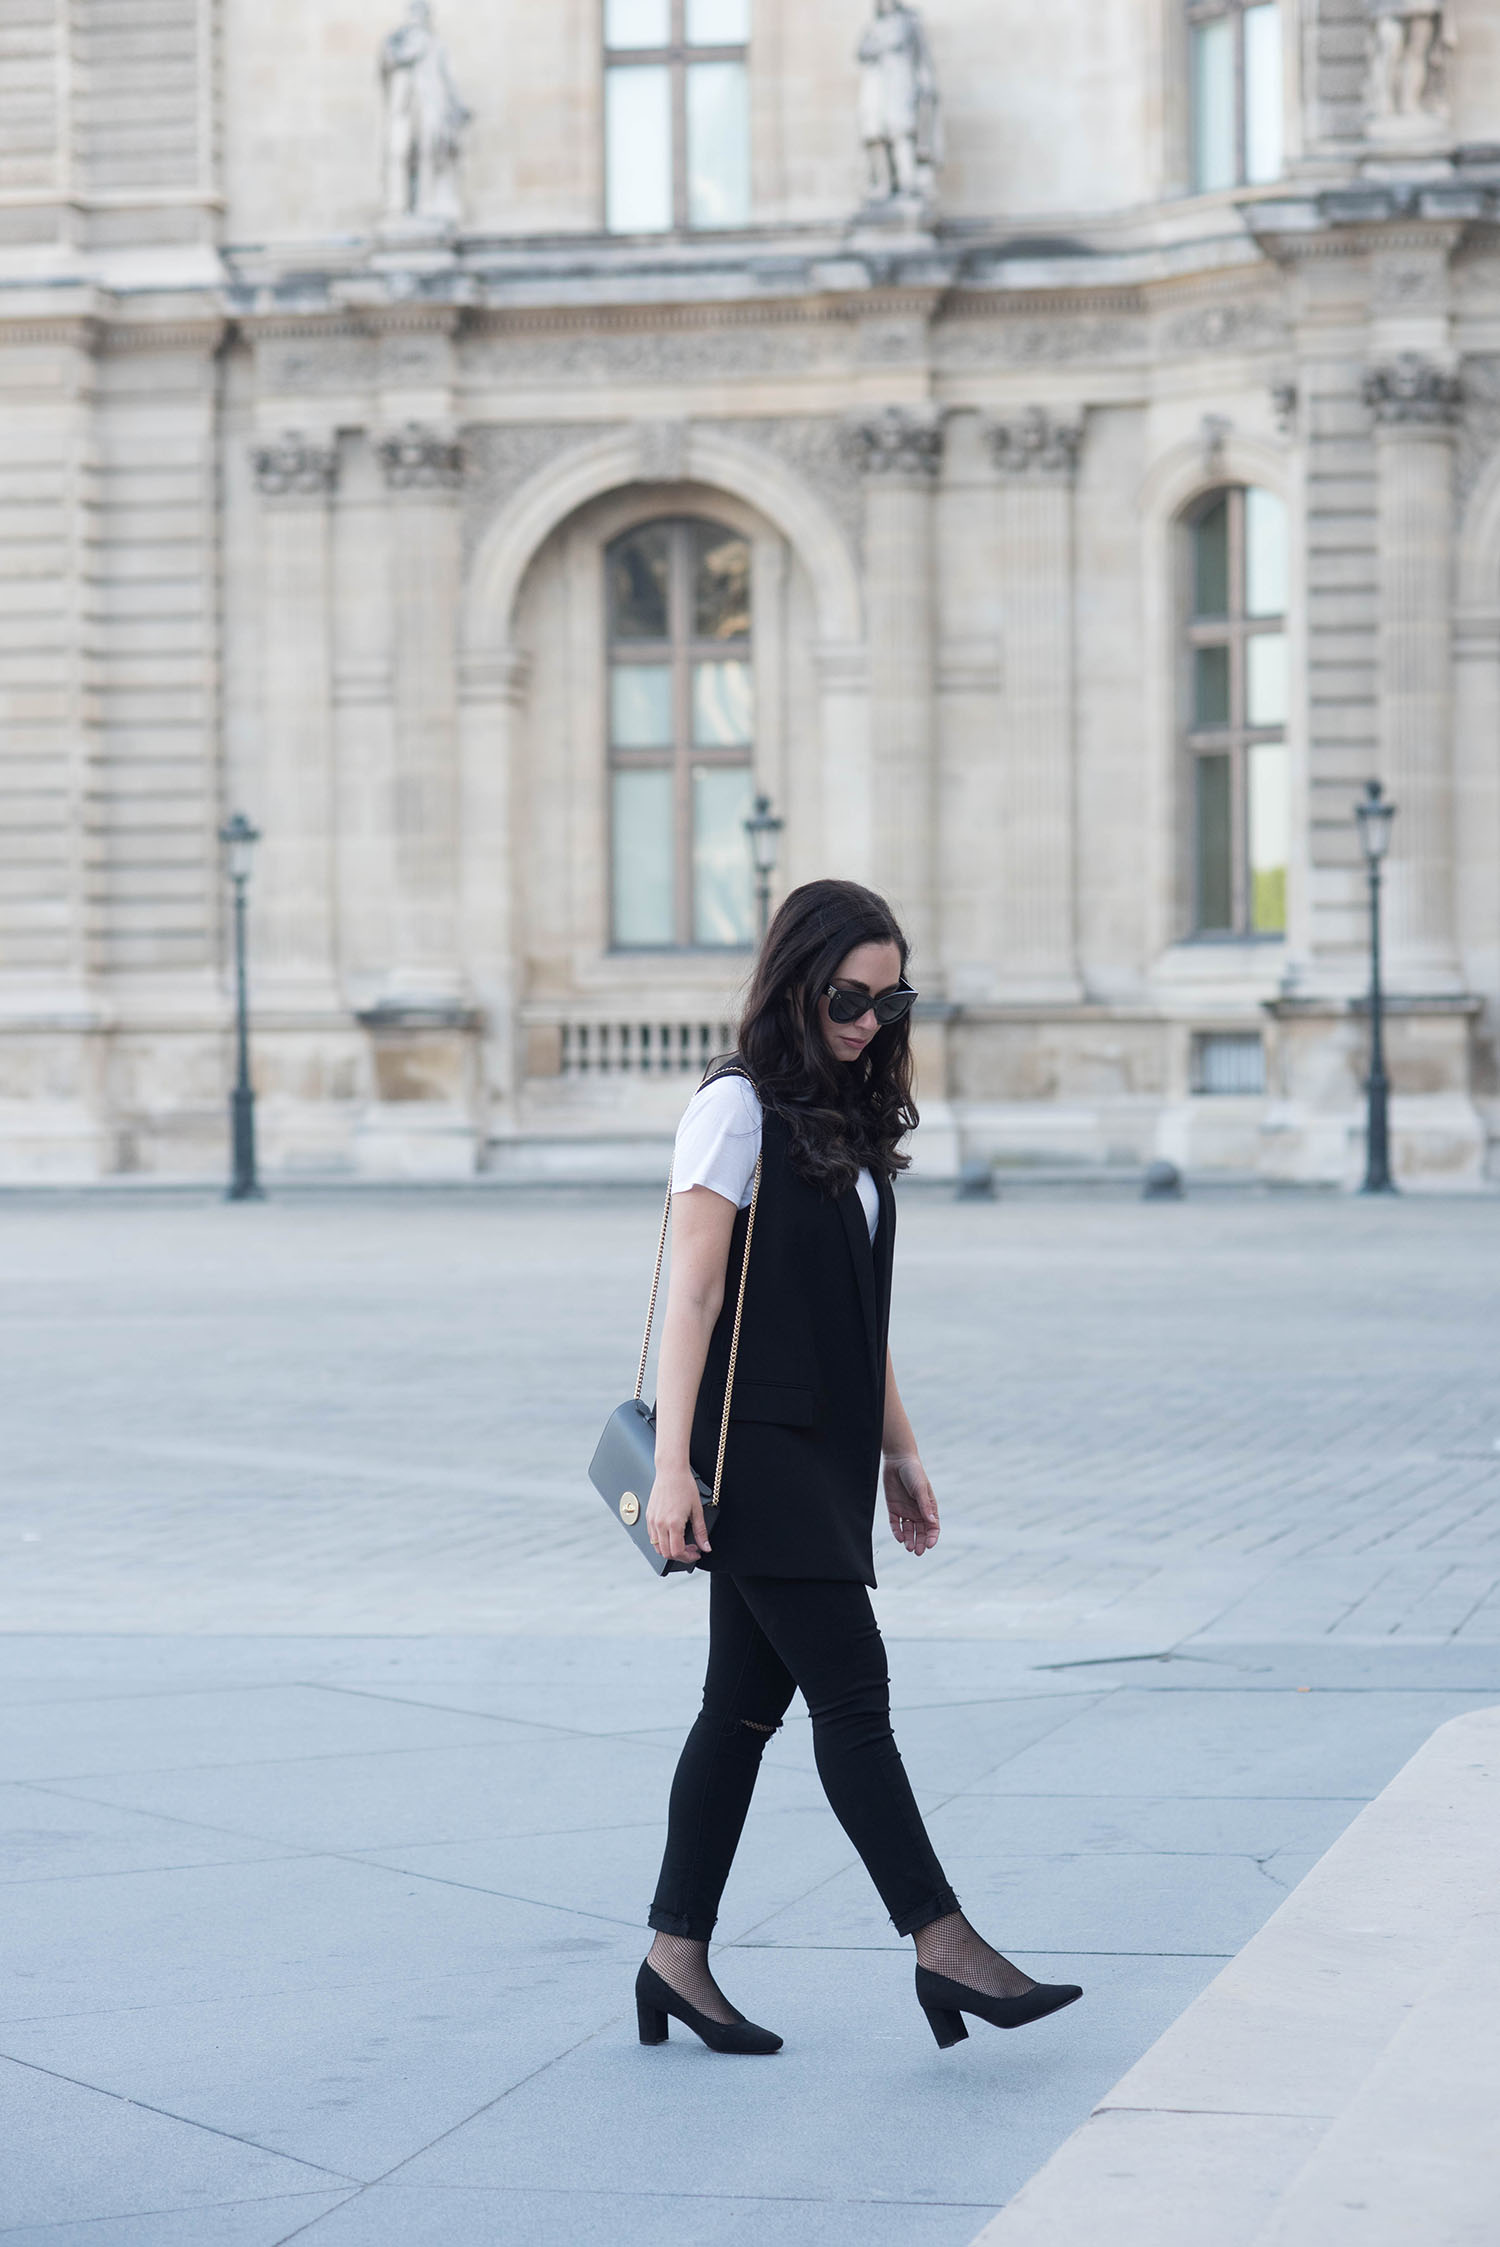 Winnipeg fashion blogger Cee Fardoe of Coco & Vera walks outside the Louvre museum in Paris wearing a black Zara waistcoat and Celine Audrey sunglasses